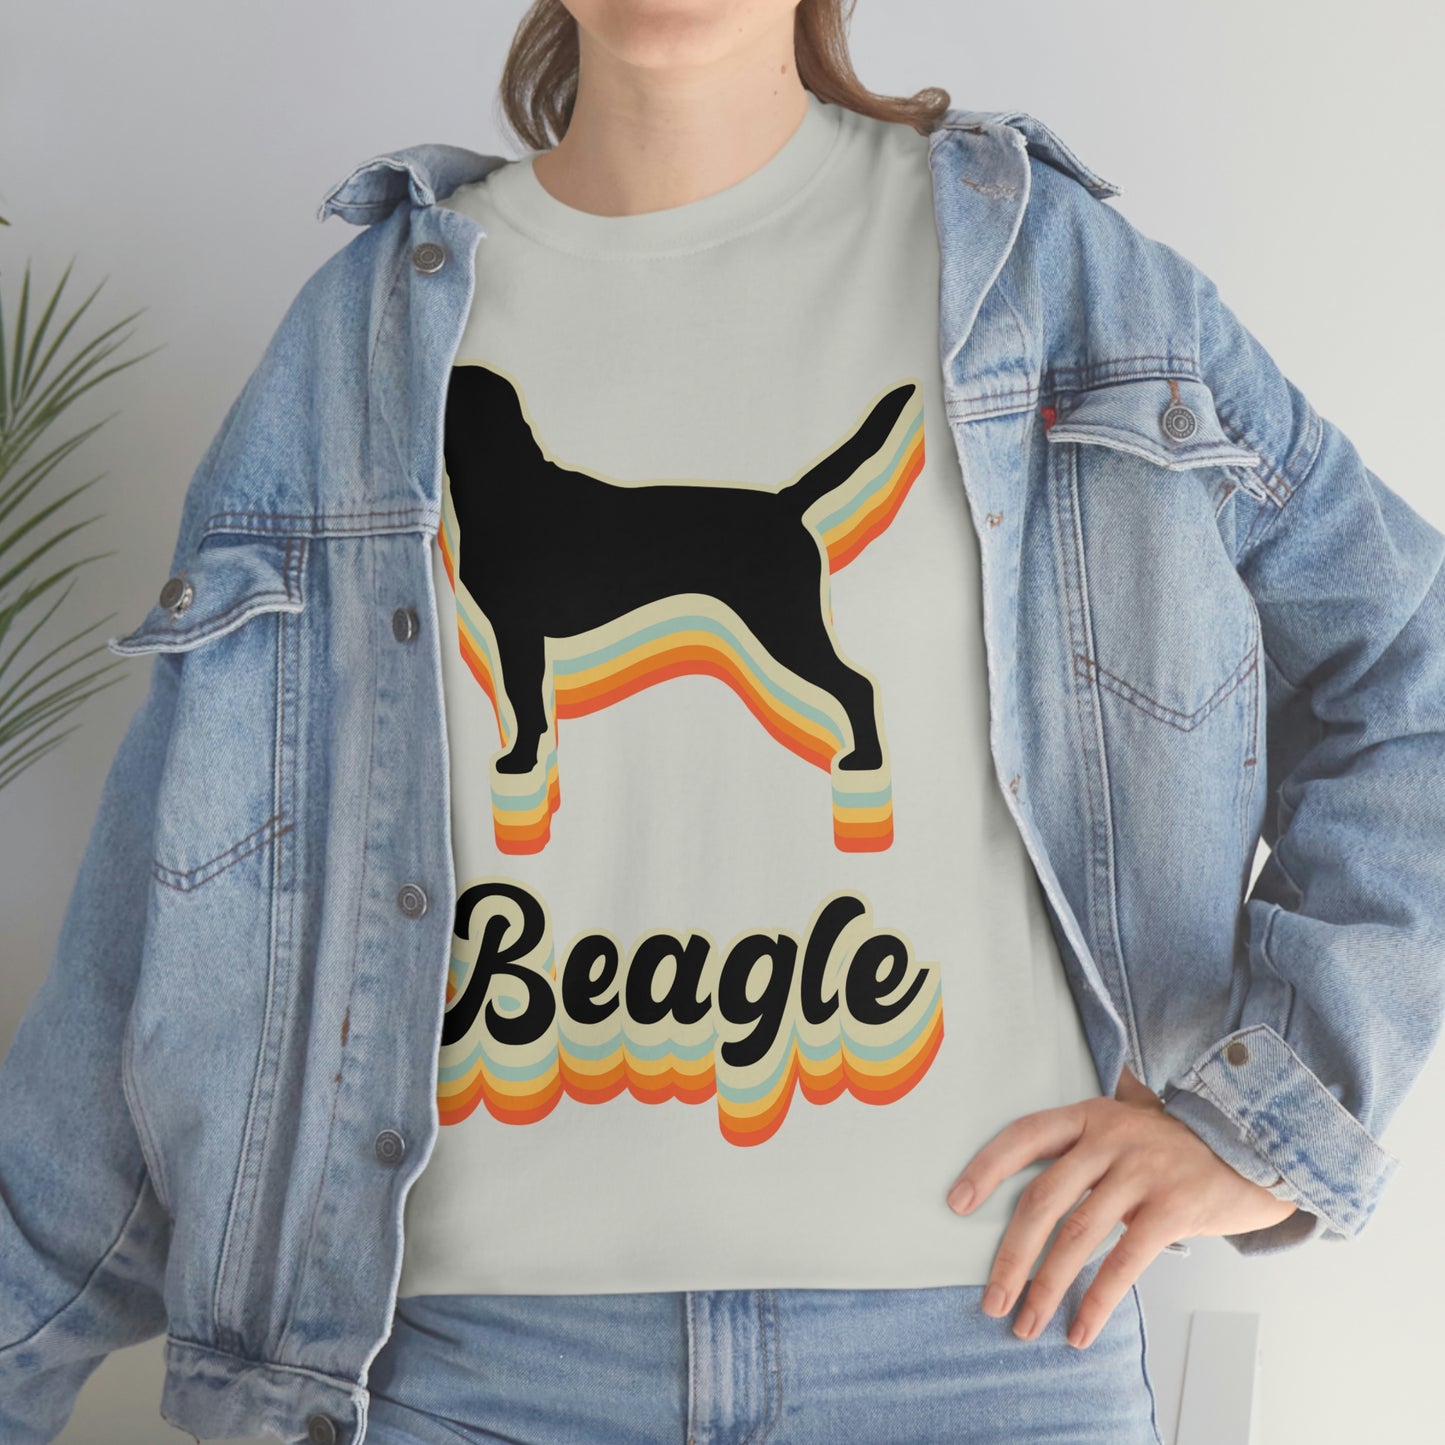 Beagle Cotton Tee